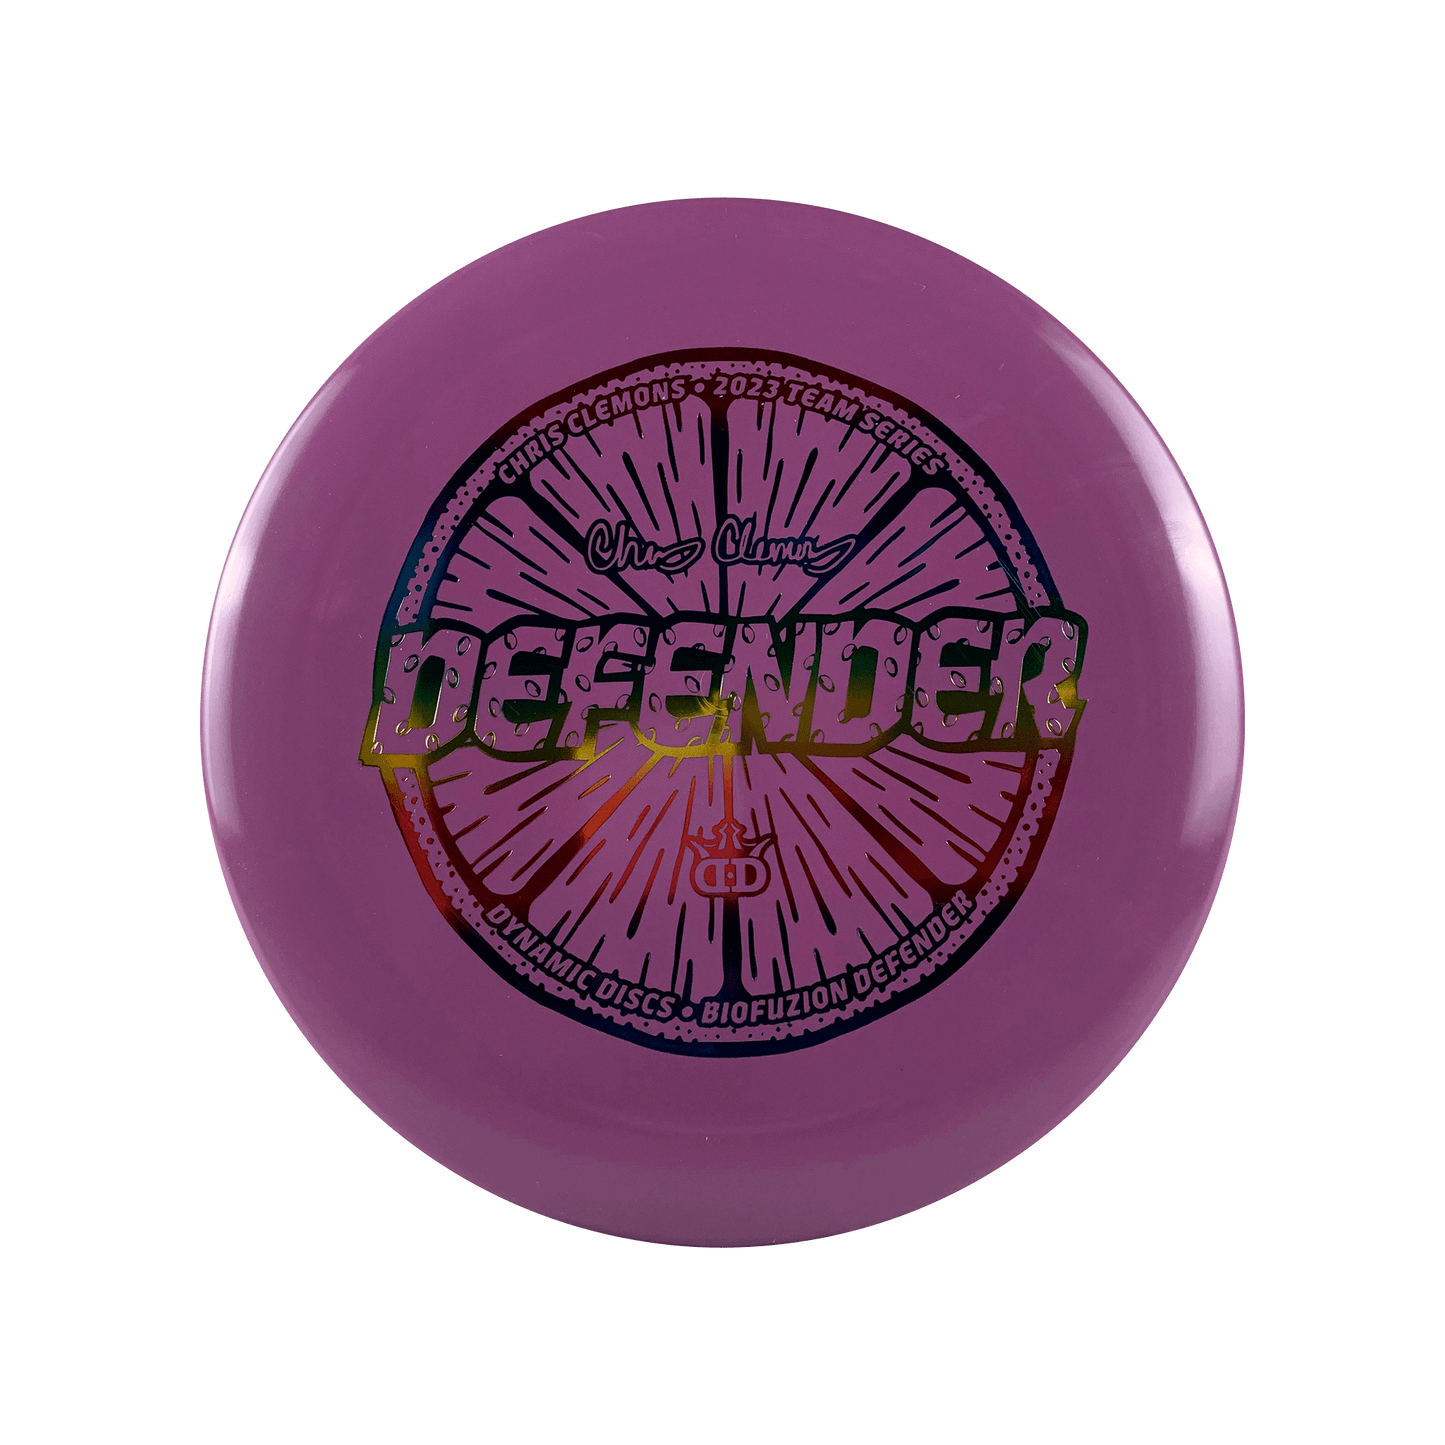 BioFuzion Defender - Chris Clemons Team Series Disc Dynamic Discs purple 174 